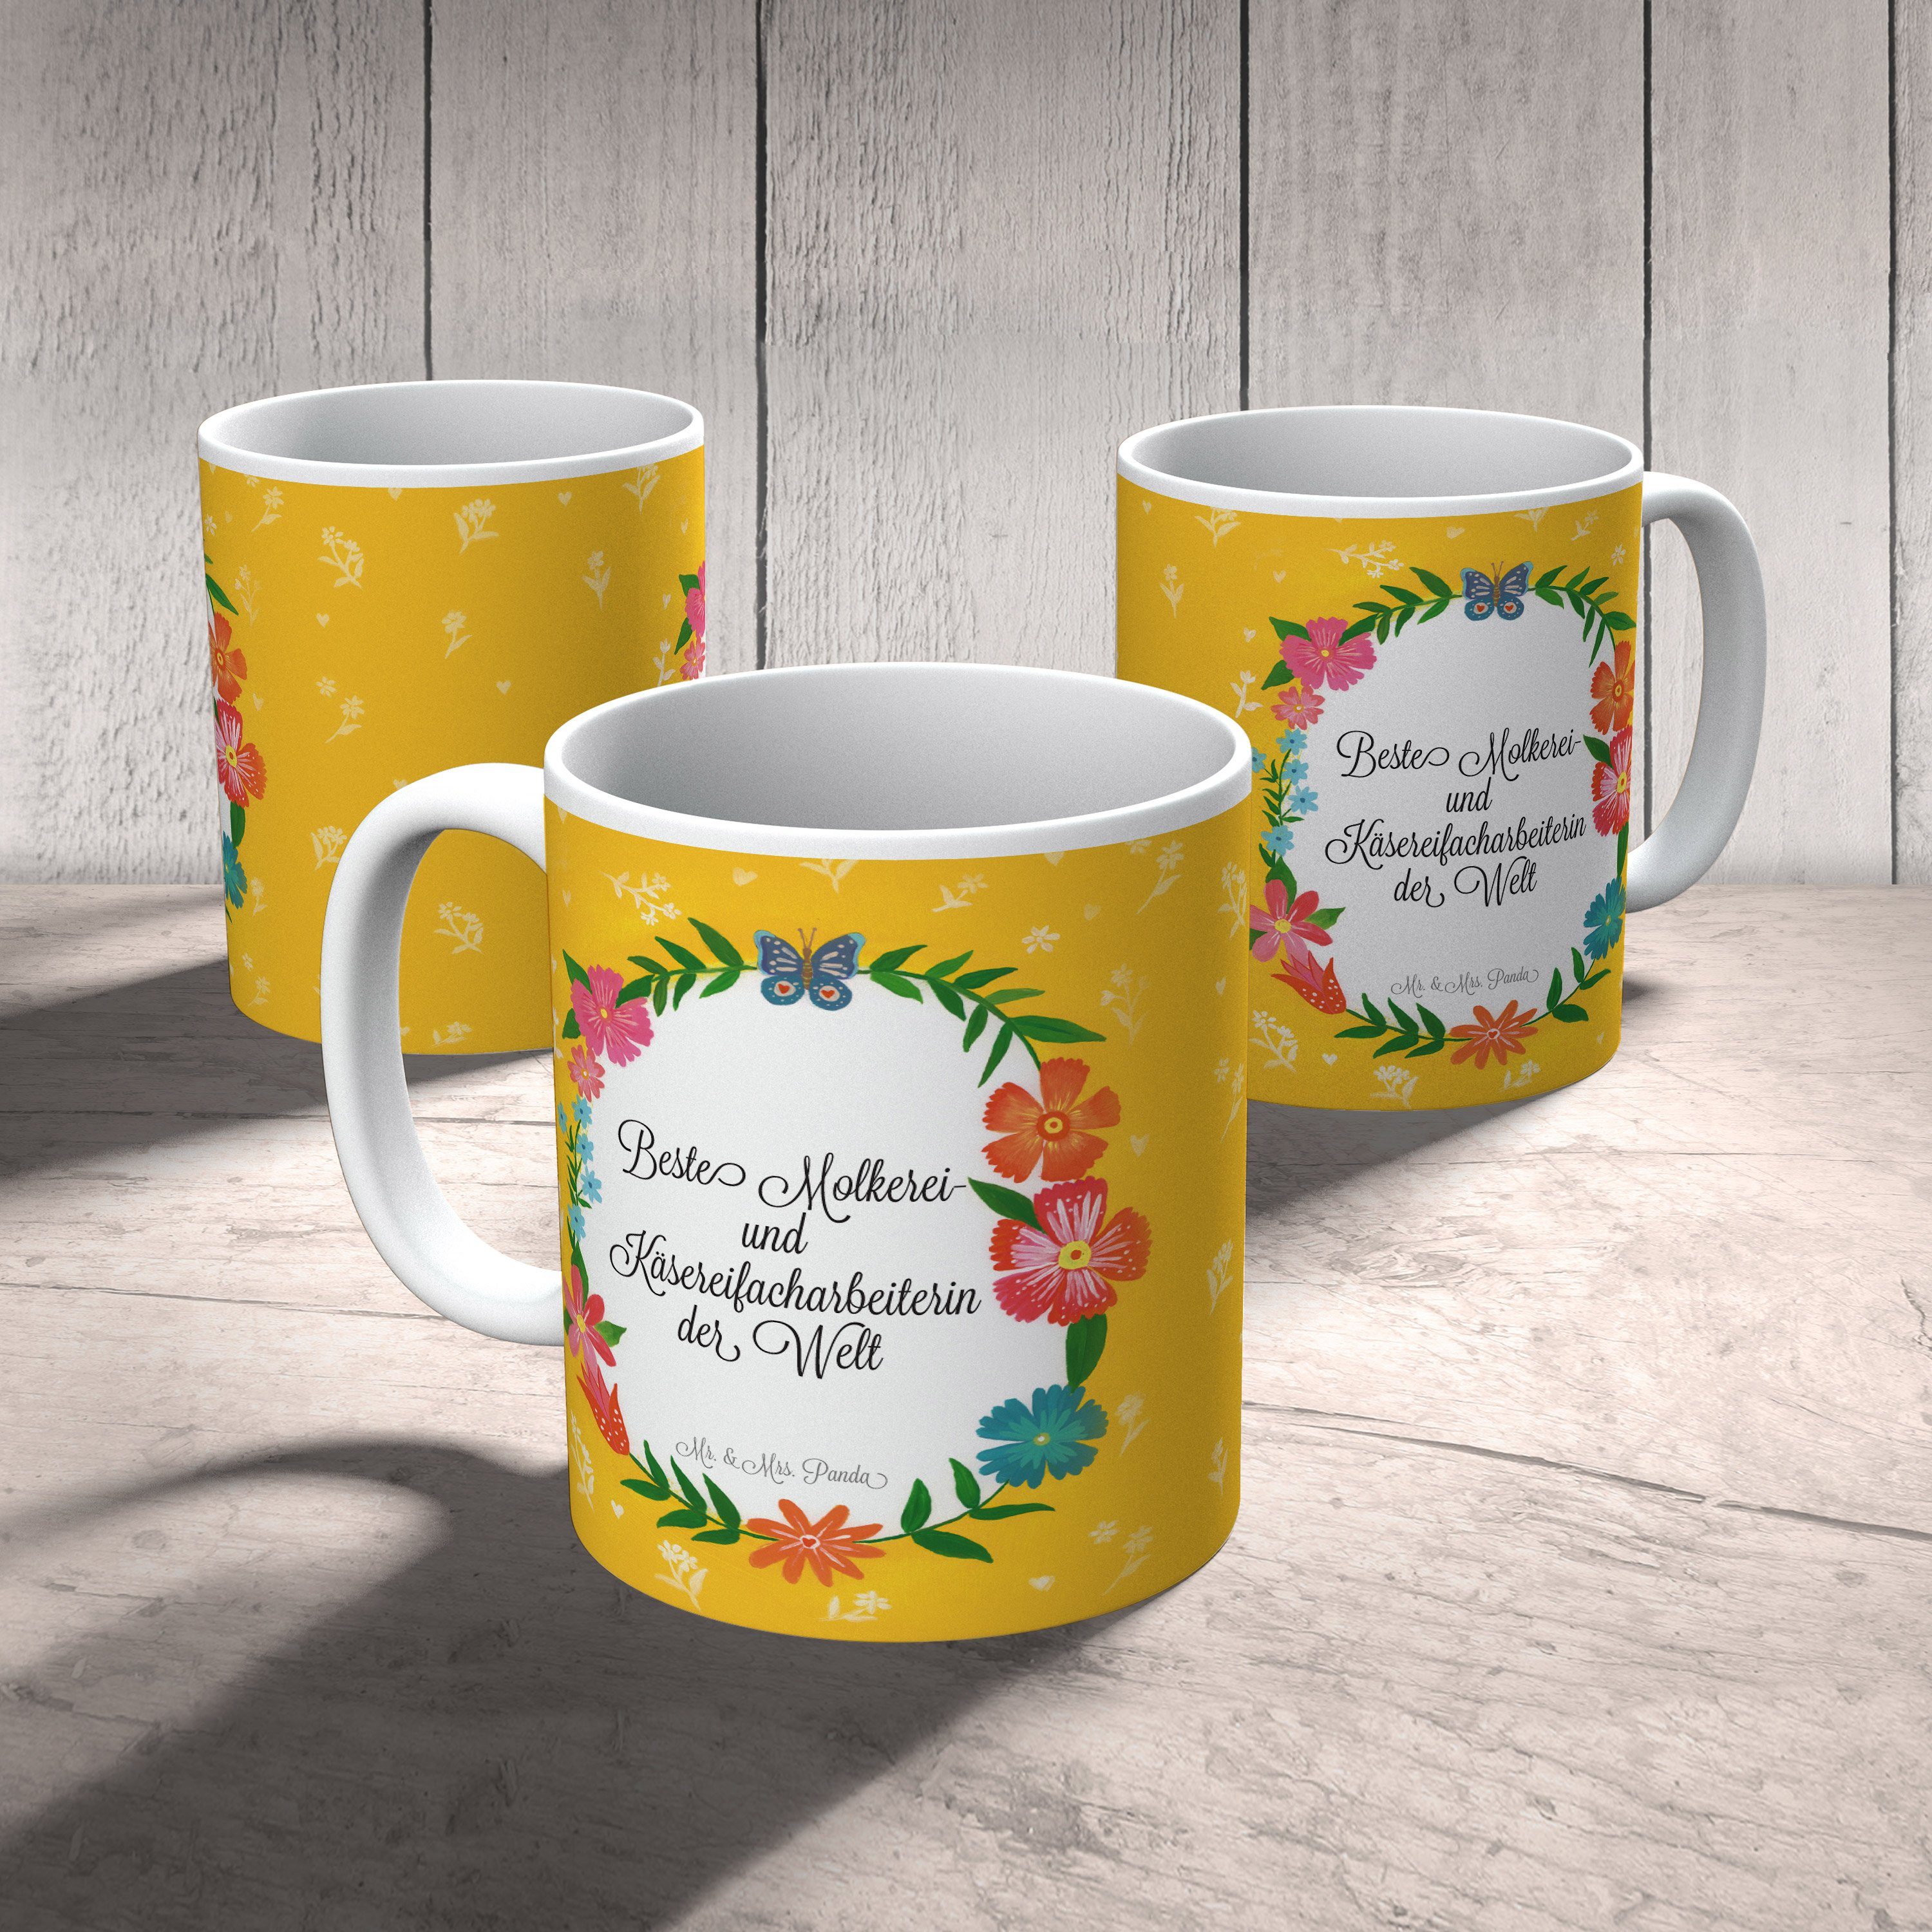 Molkerei- Gratulation, und - Kaffeebe, Panda Käsereifacharbeiterin Tasse & Mr. Mrs. Keramik Geschenk,